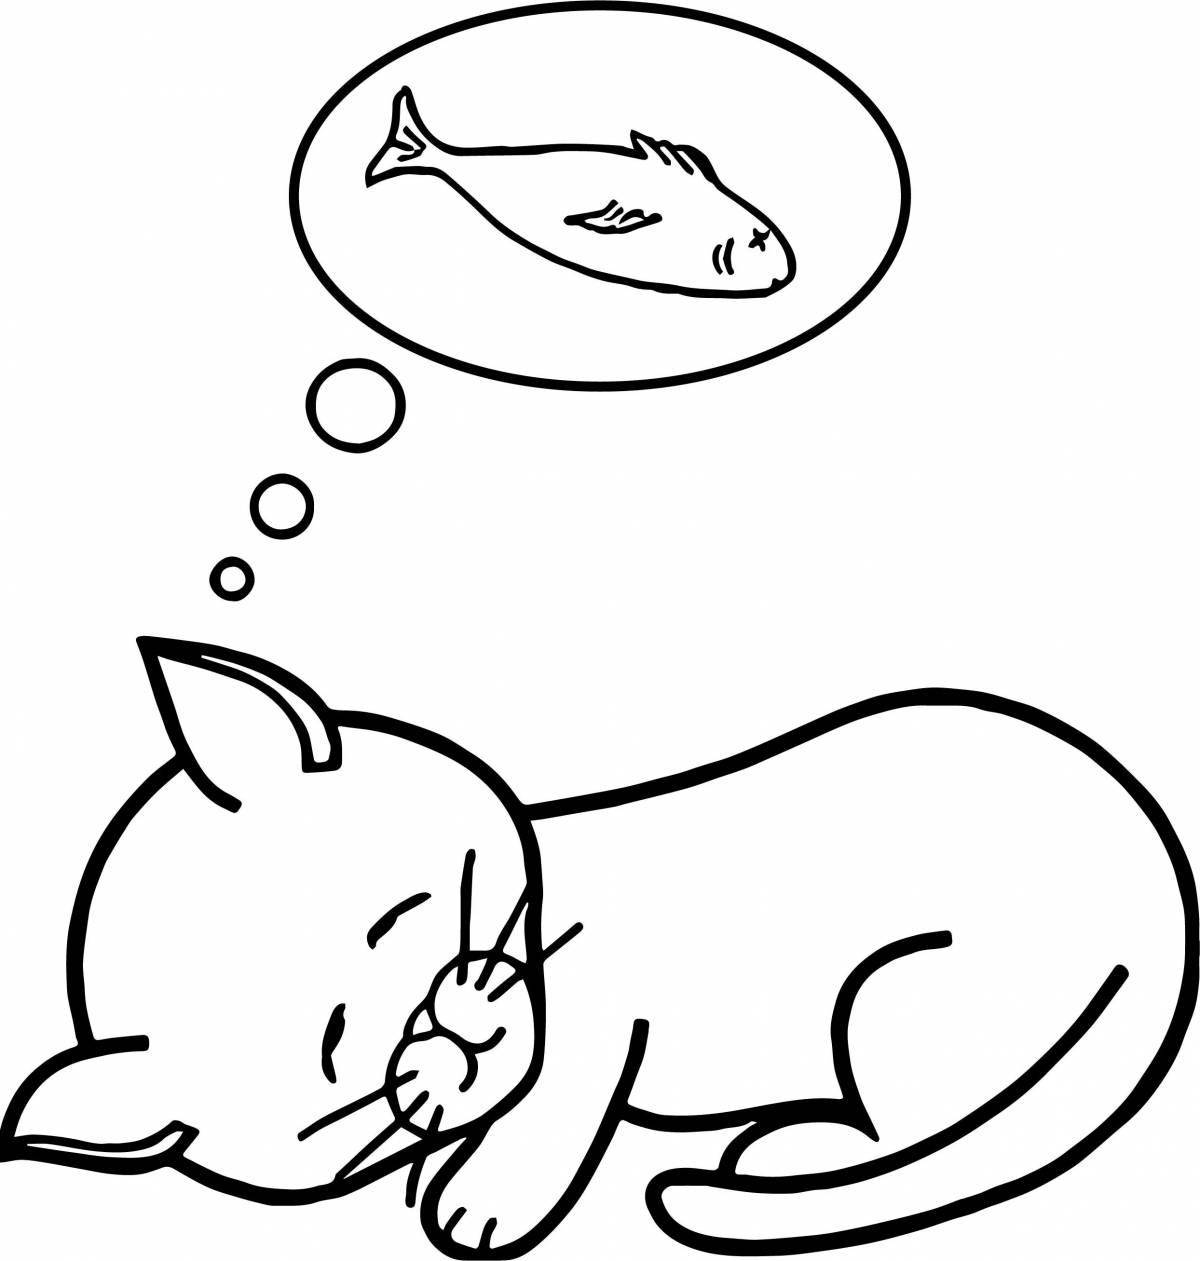 Peaceful sleeping cat coloring book